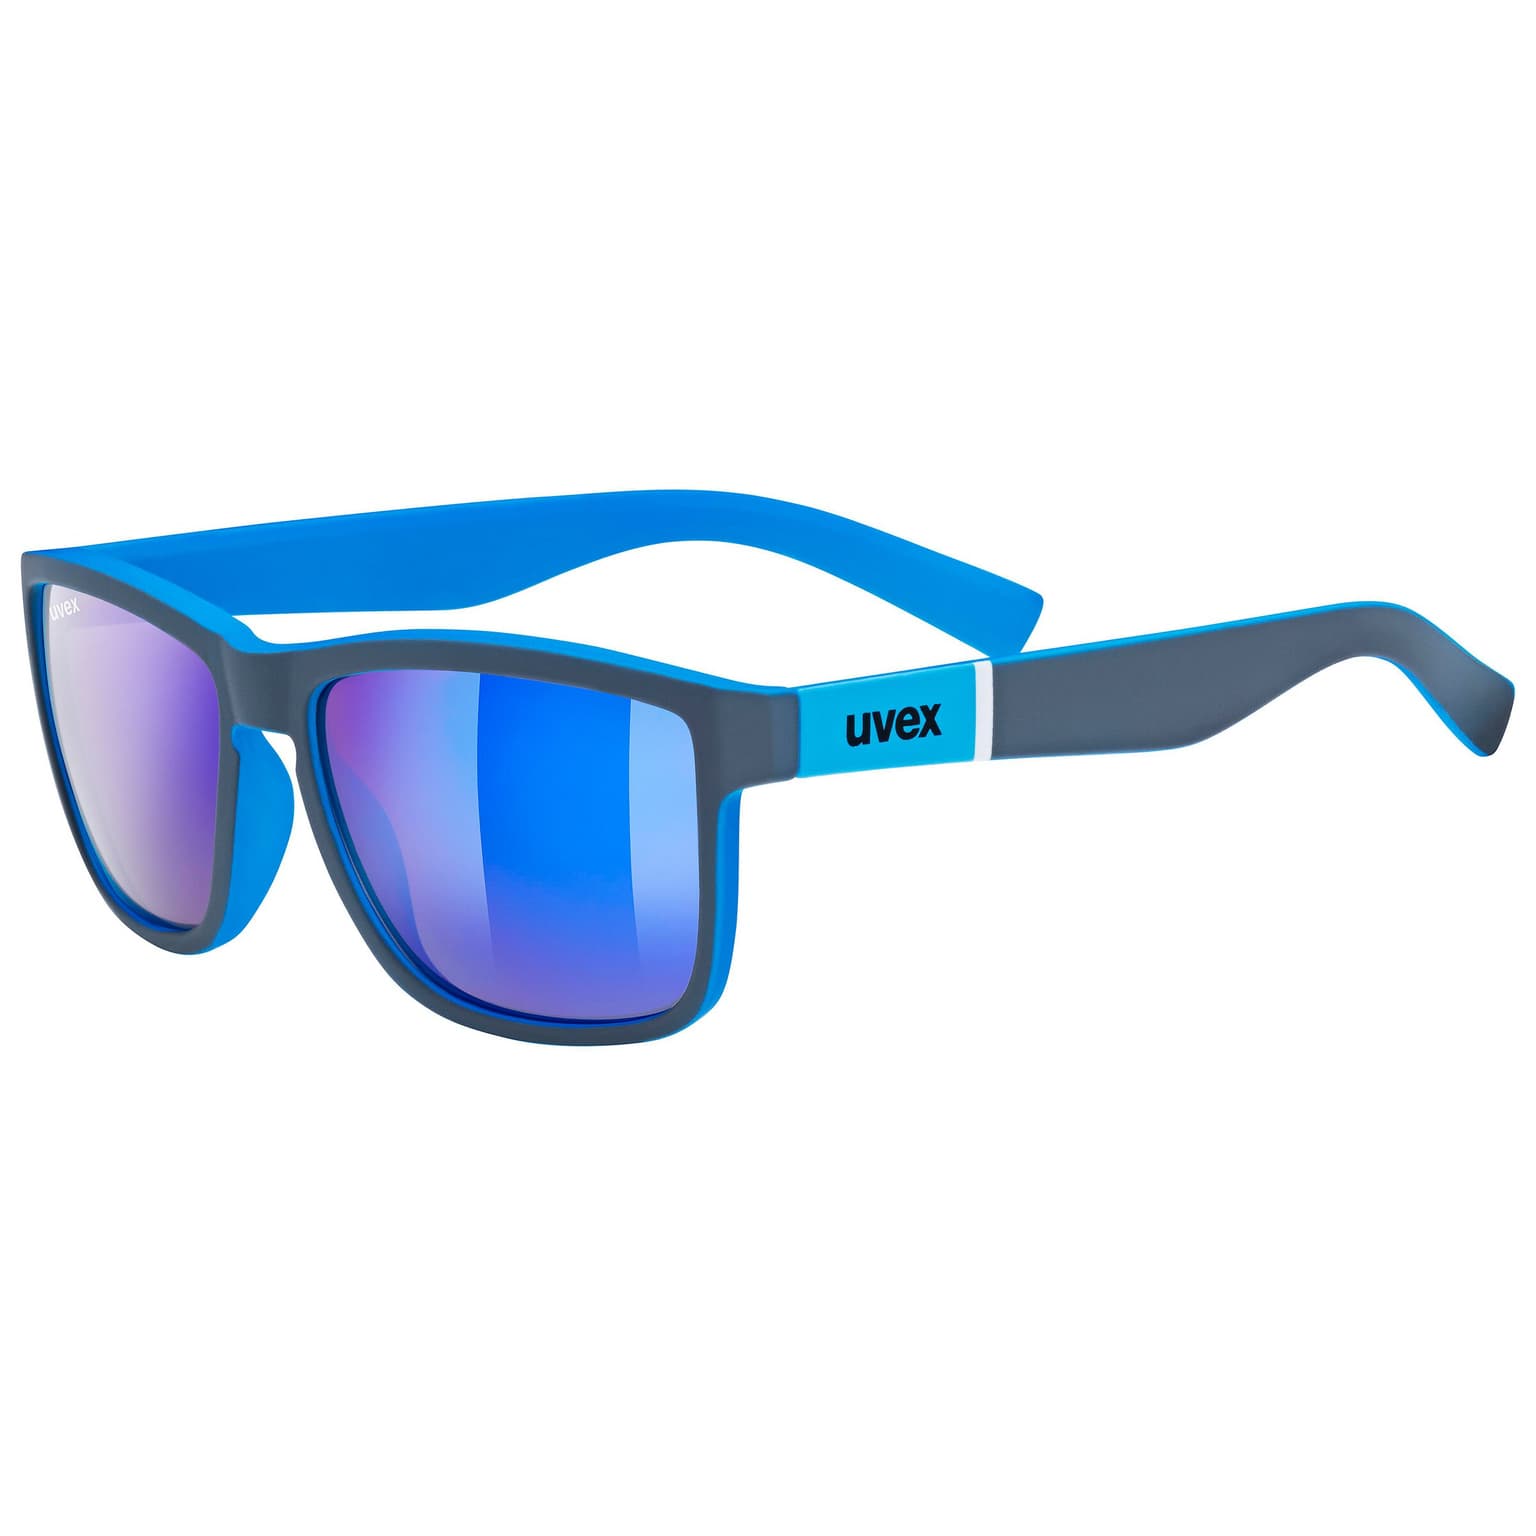 Uvex Uvex Lifestyle lgl 39 Sportbrille blu 1